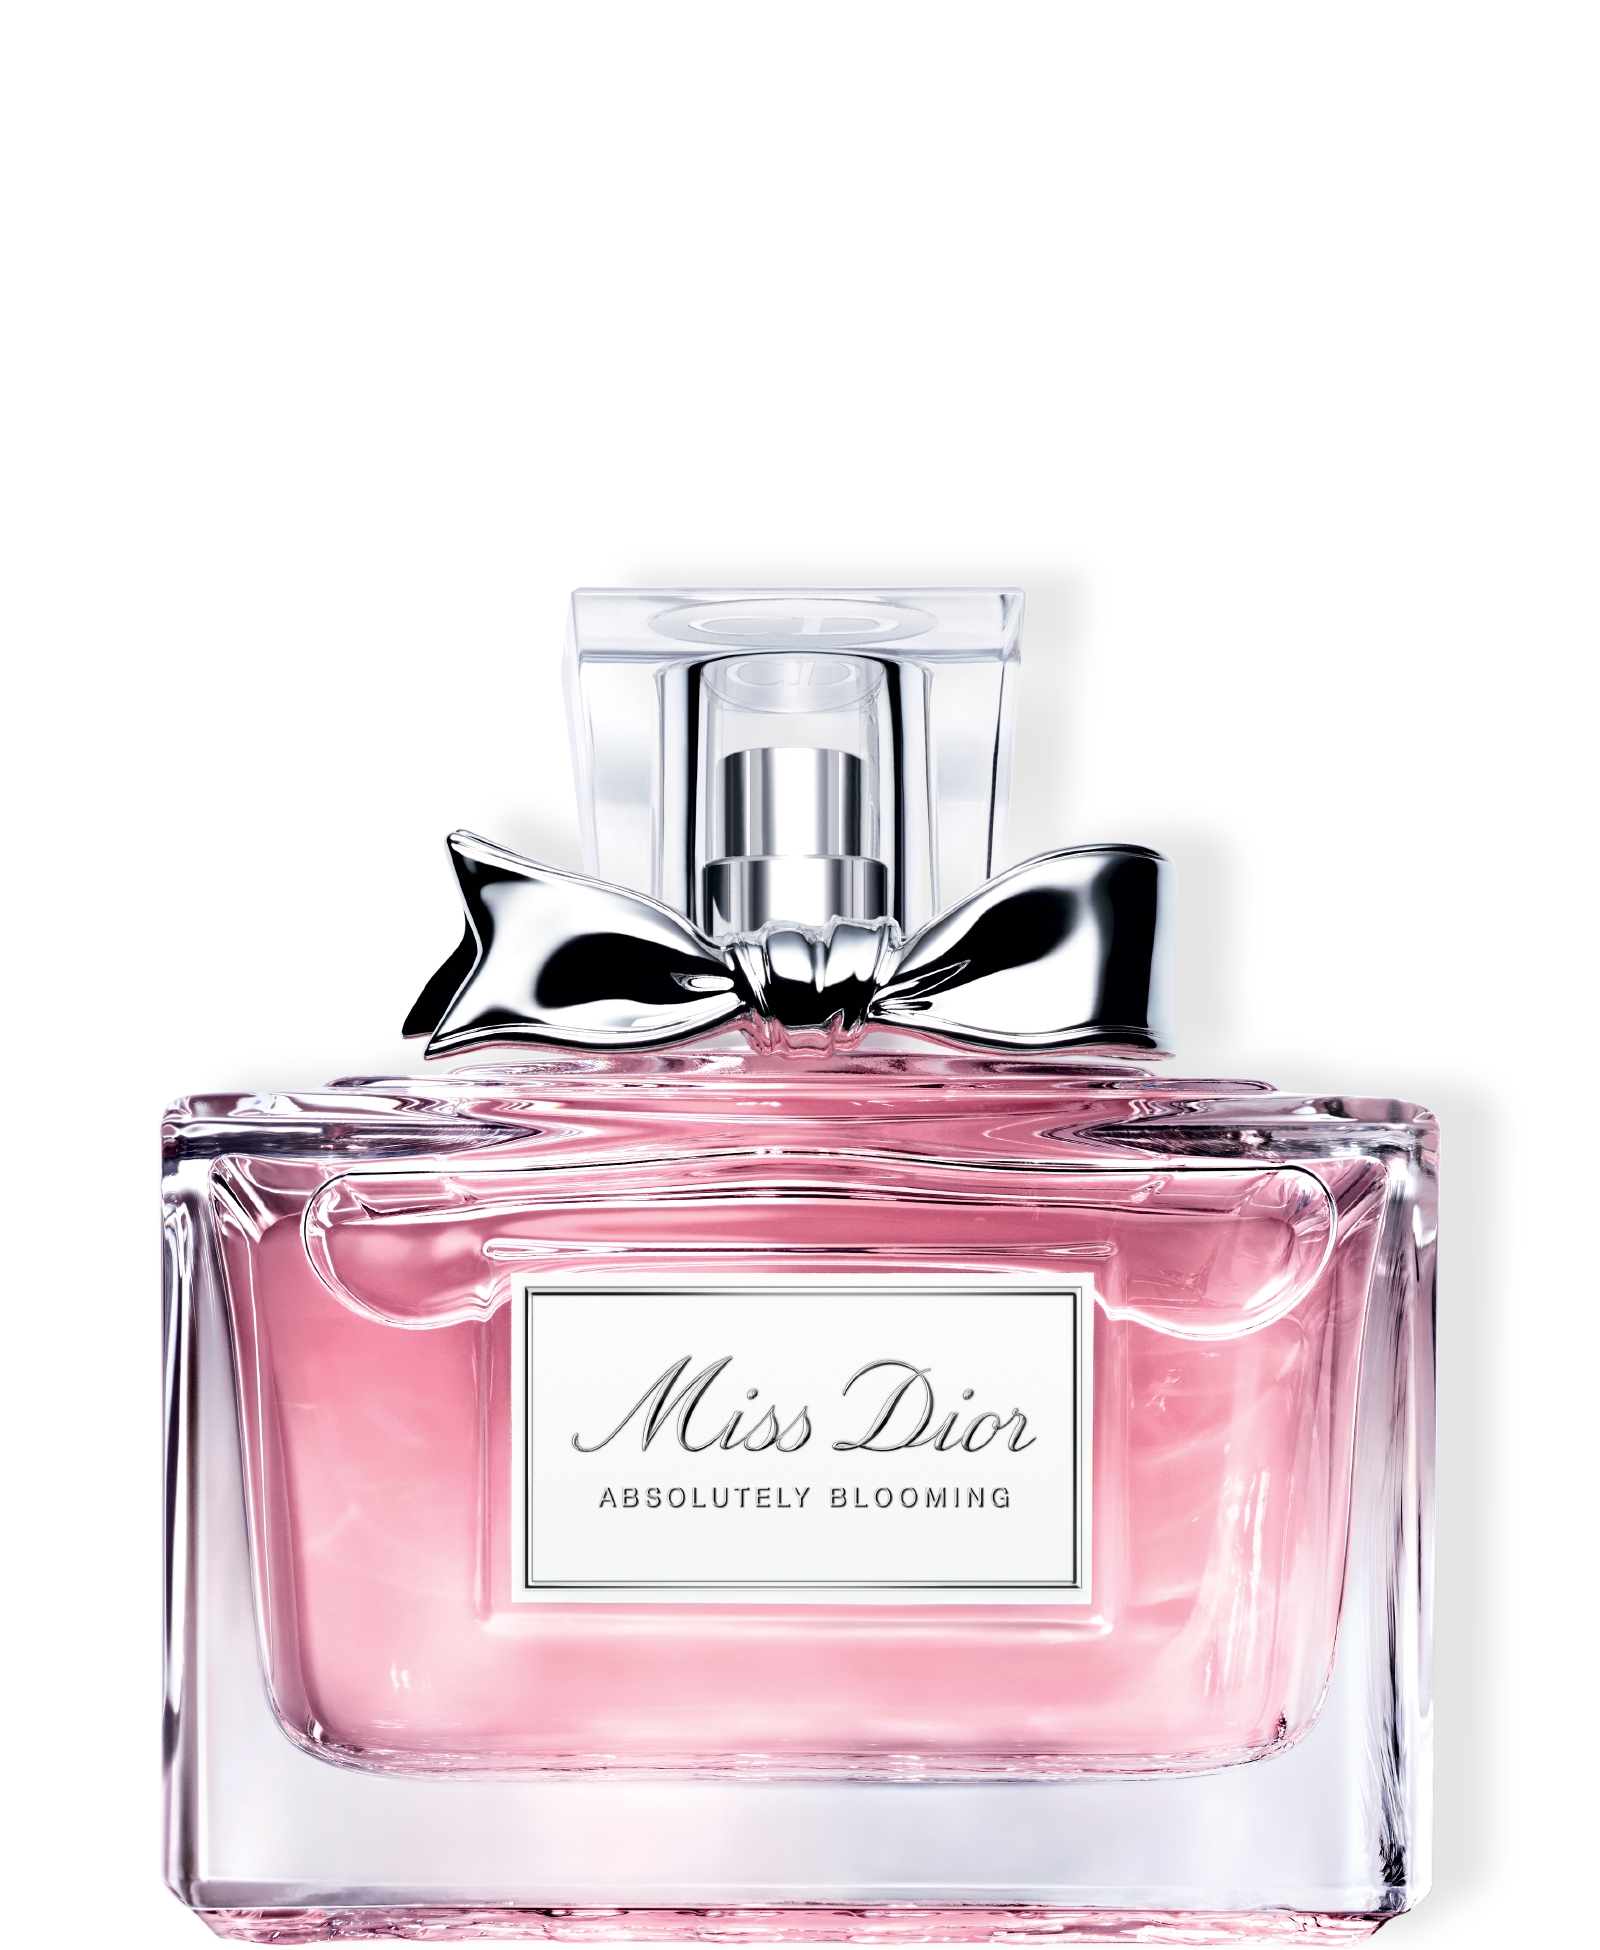  Miss Dior Absolutely Blooming Eau de Parfum